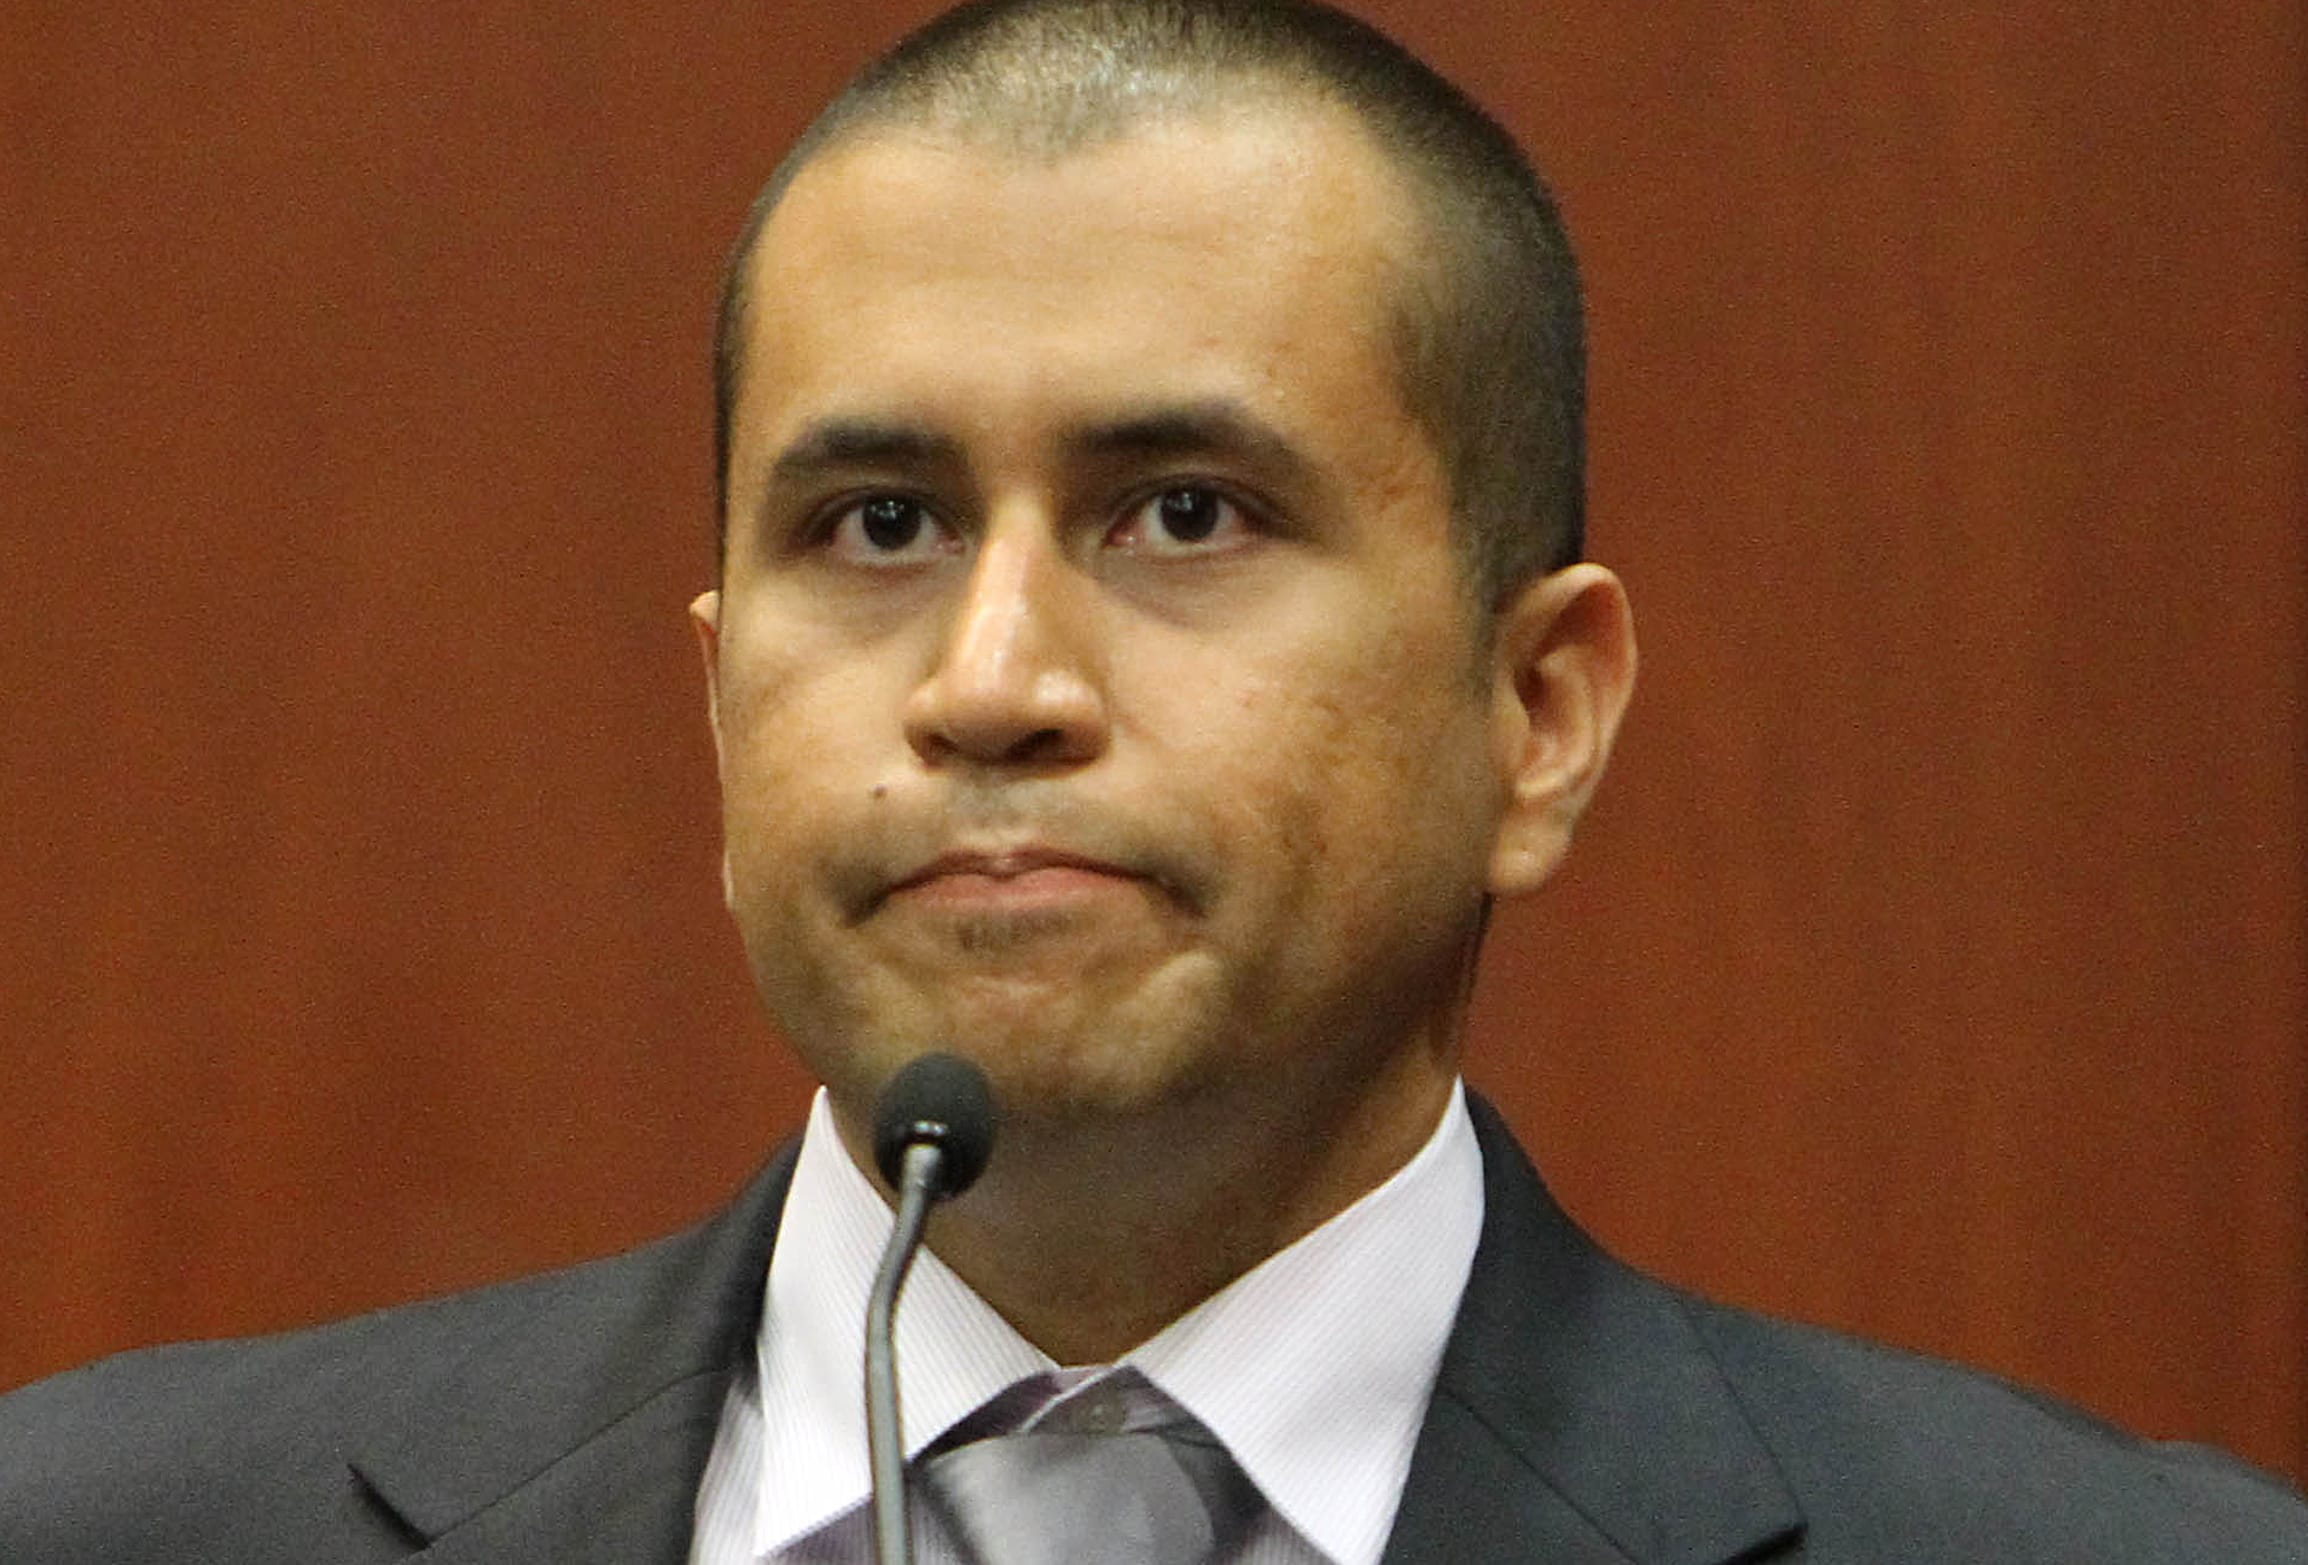 George Zimmerman in court in 2012.